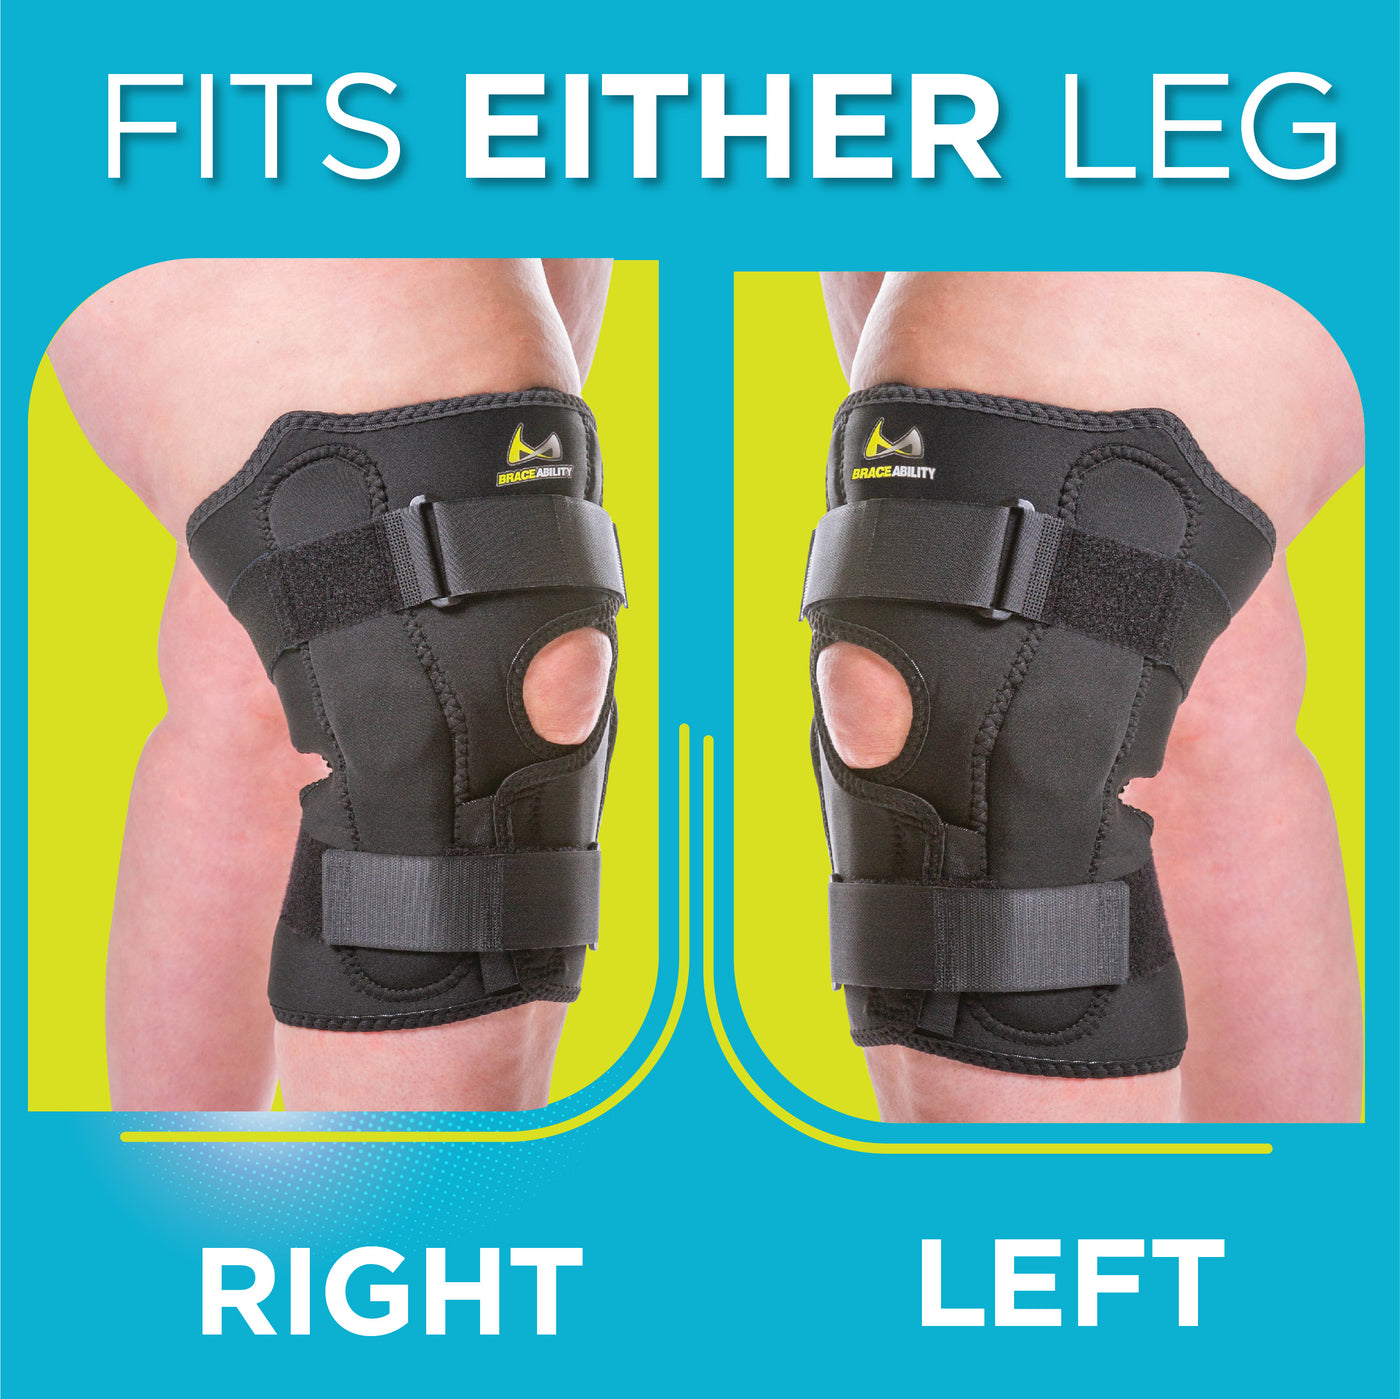 Hinged Knee Brace Adjustable Knee Support Wrap for Men&Women Pain